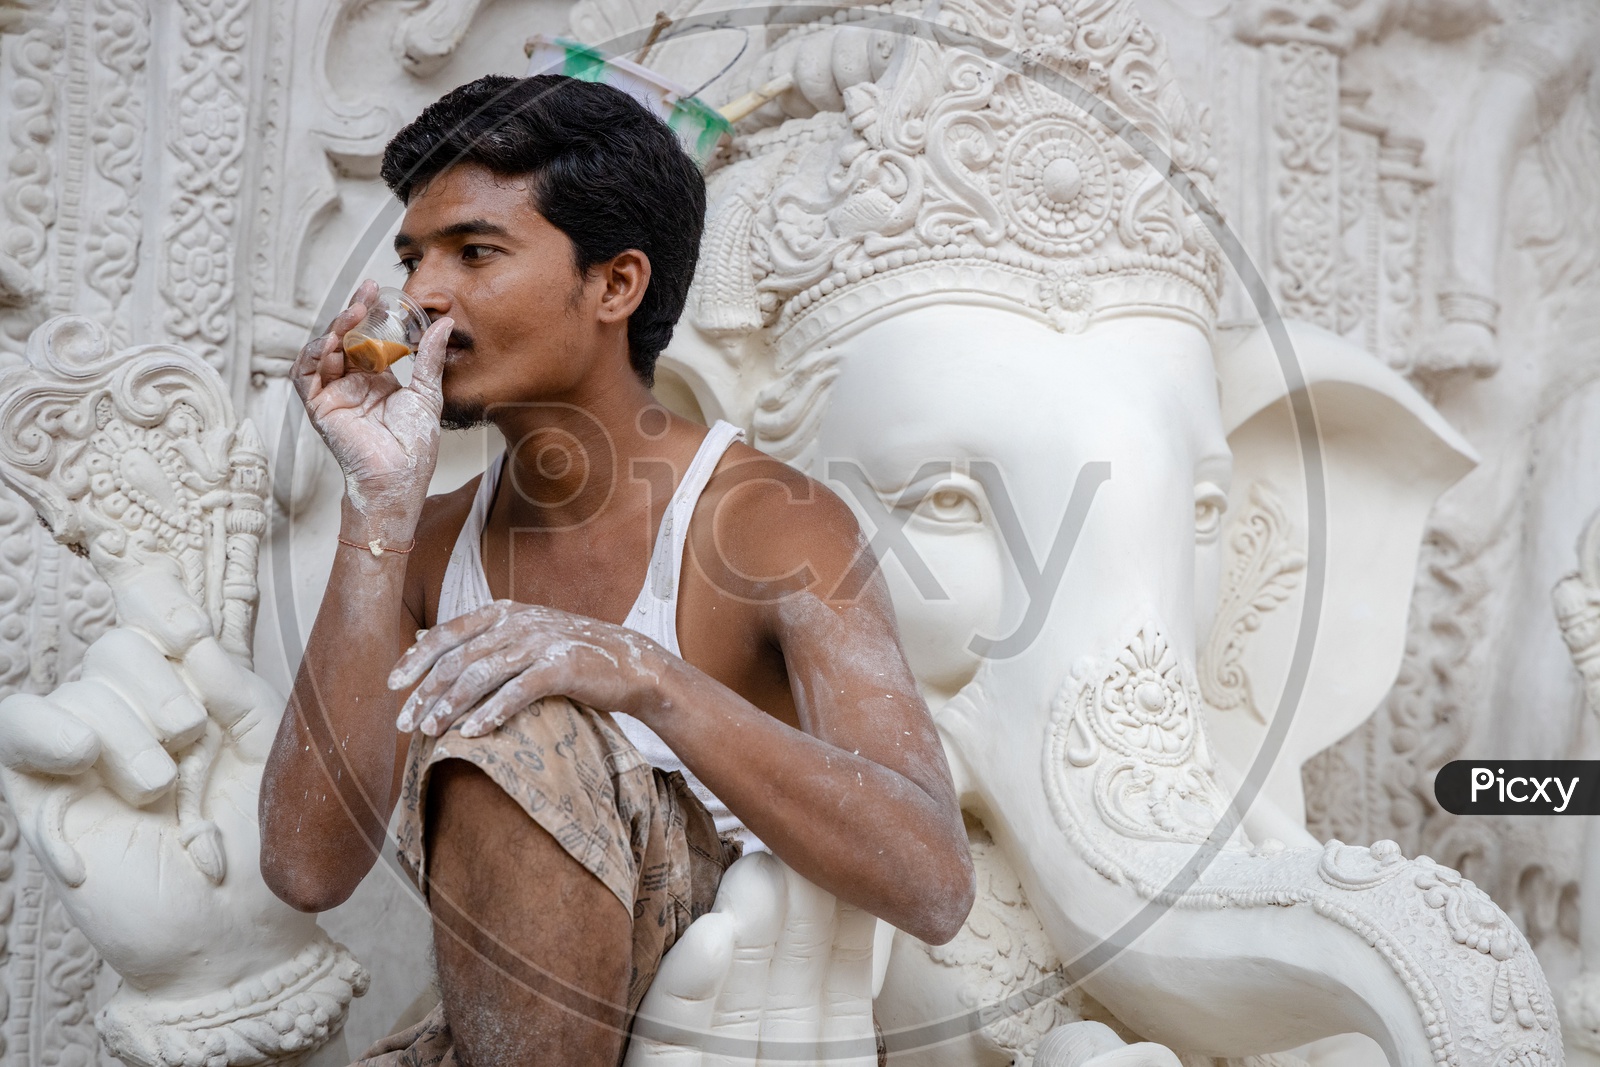 A Worker Artist Having Tea While Carving  Ganesh idols  in workshops